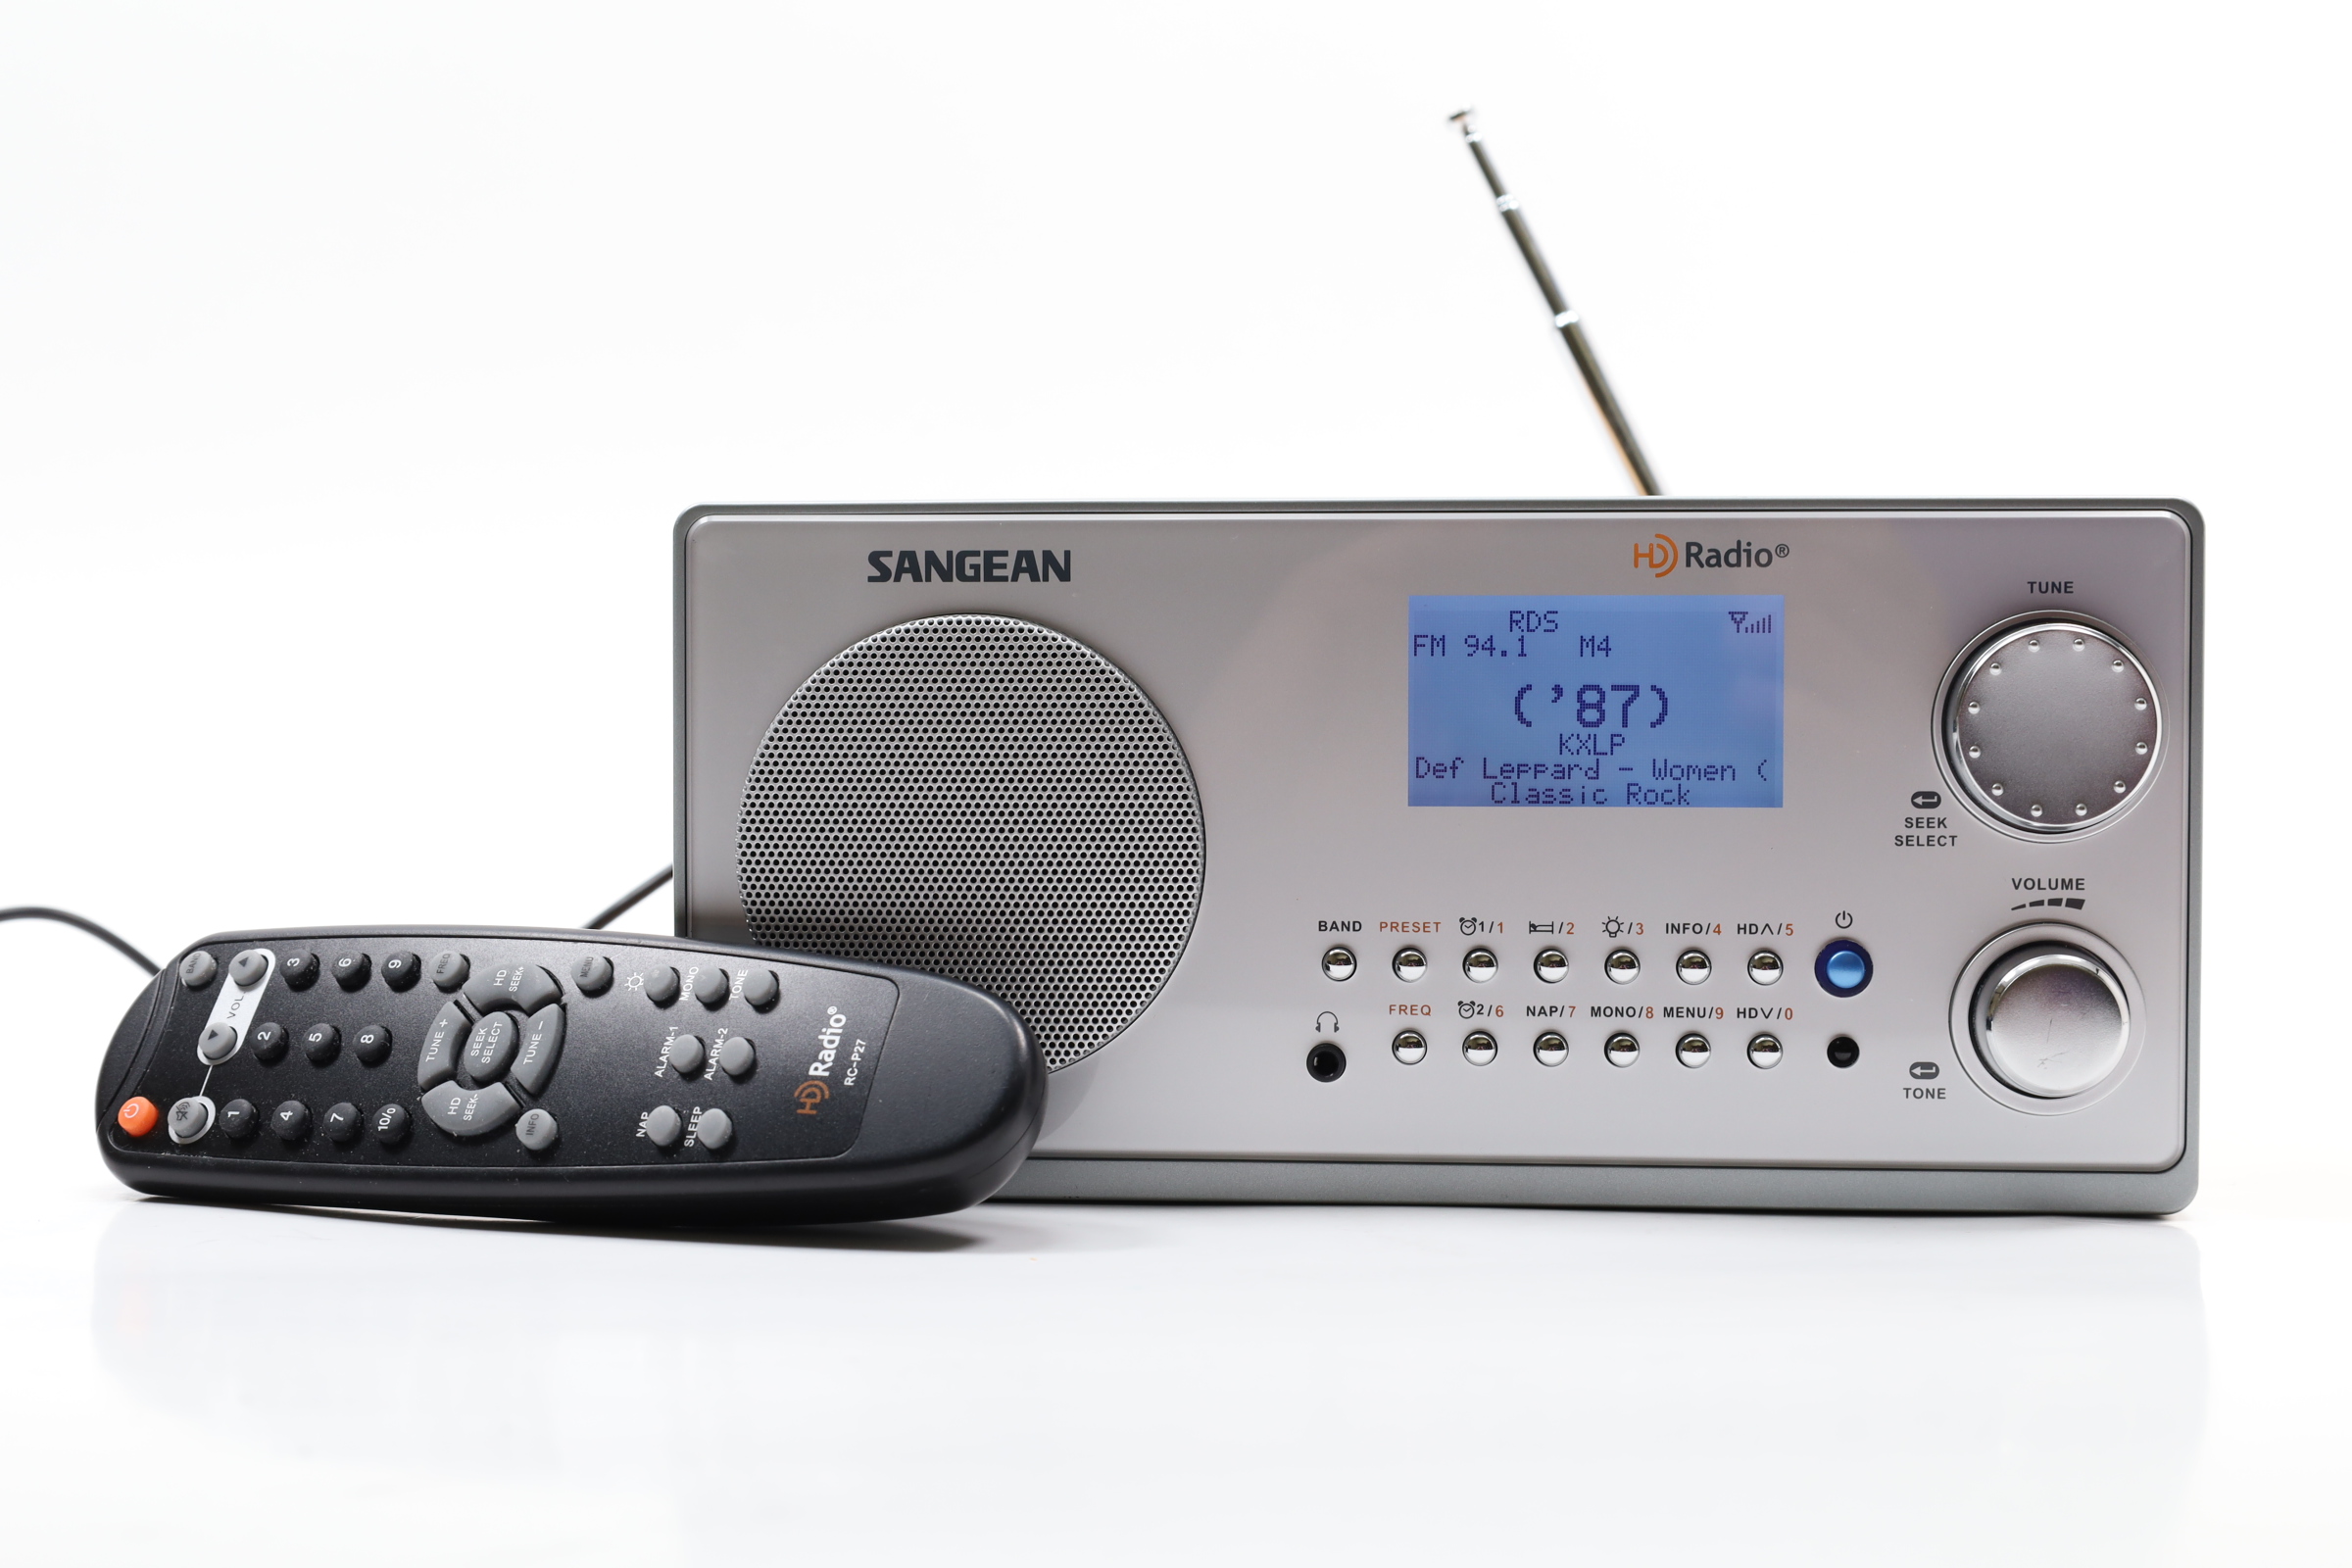 Sangean HDR-14 HD AM/FM-Stereo Portable Radio - Black or Clea